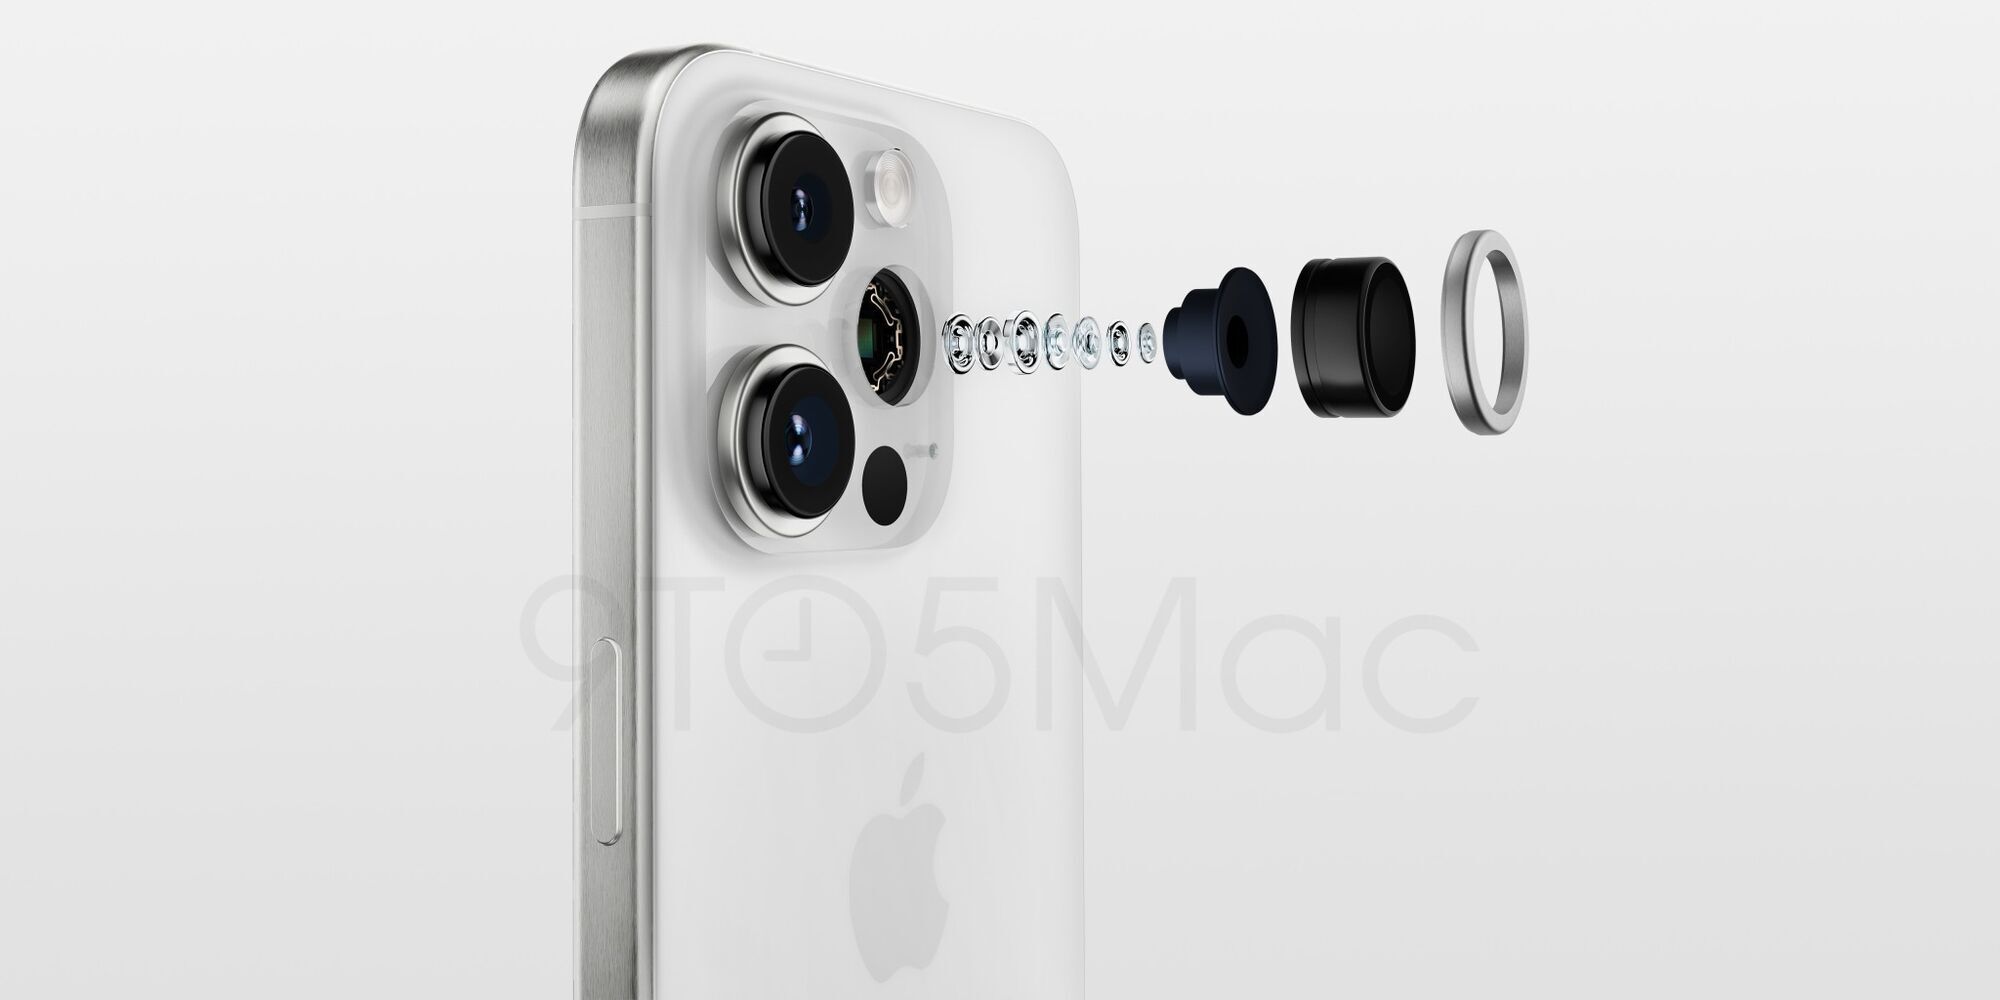 iPhone 15 Pro Max has periscope telephoto lens